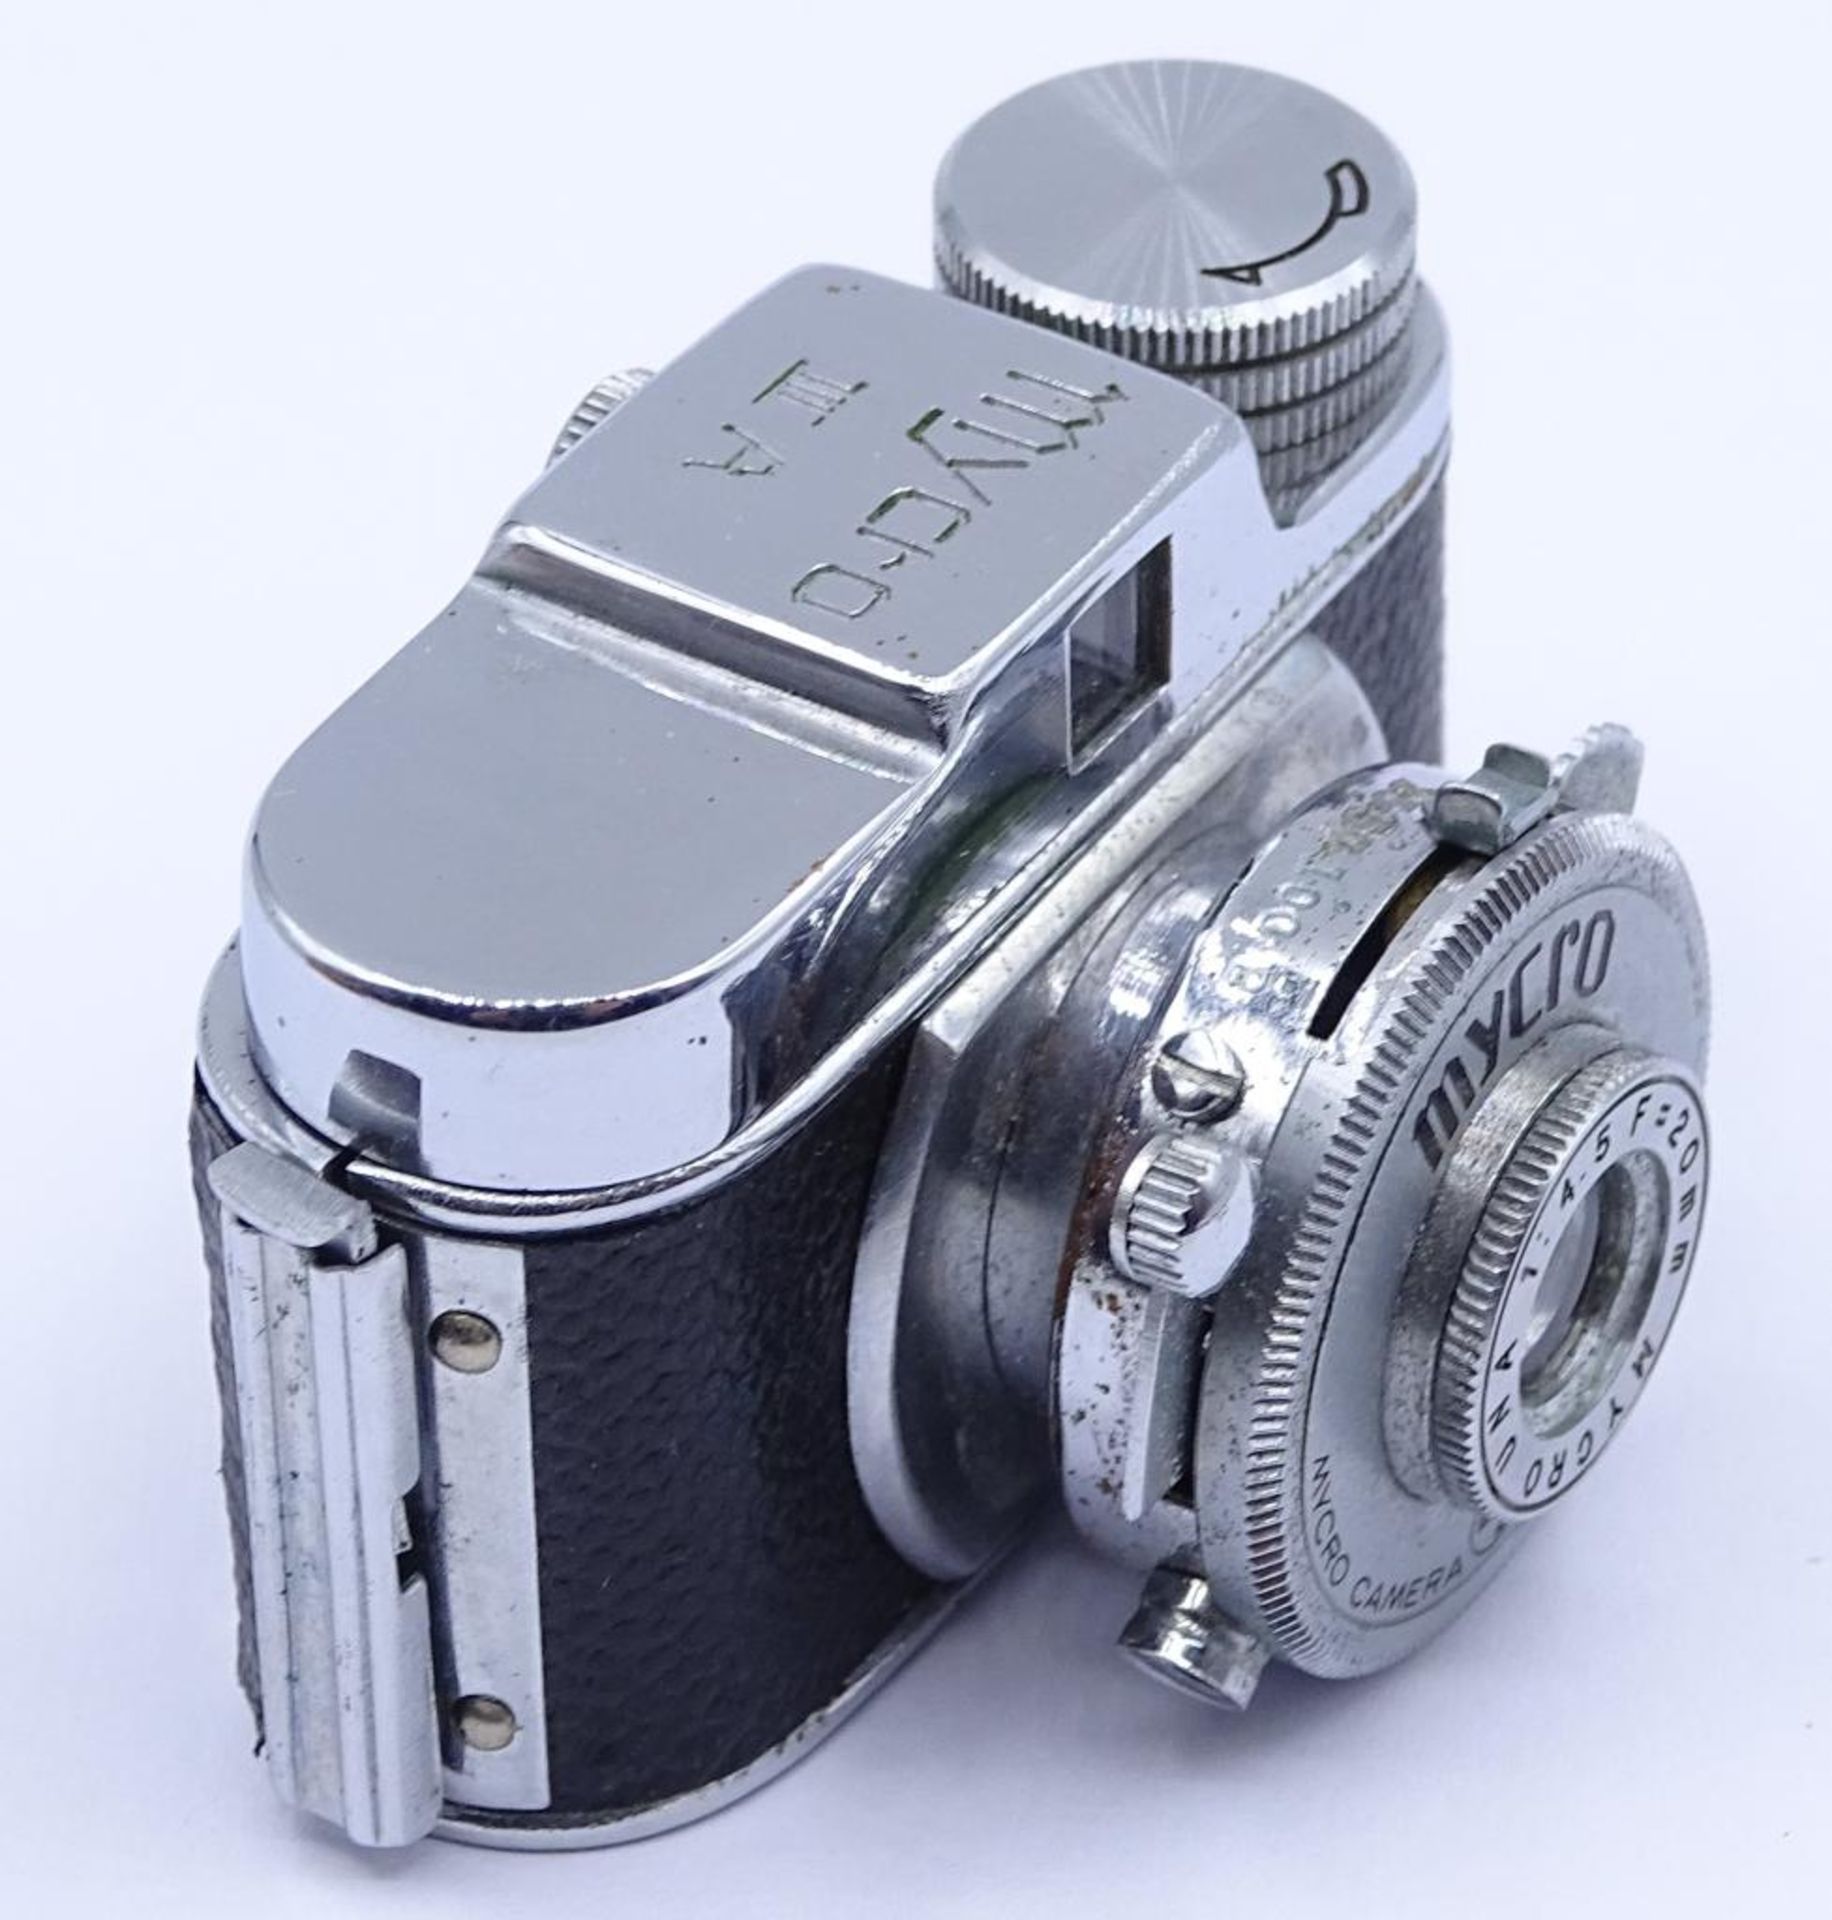 Mycro IIIA Miniatur Kamera in orig. Ledertasche, ca. 3x6 cm, gut erhalten - Bild 3 aus 4